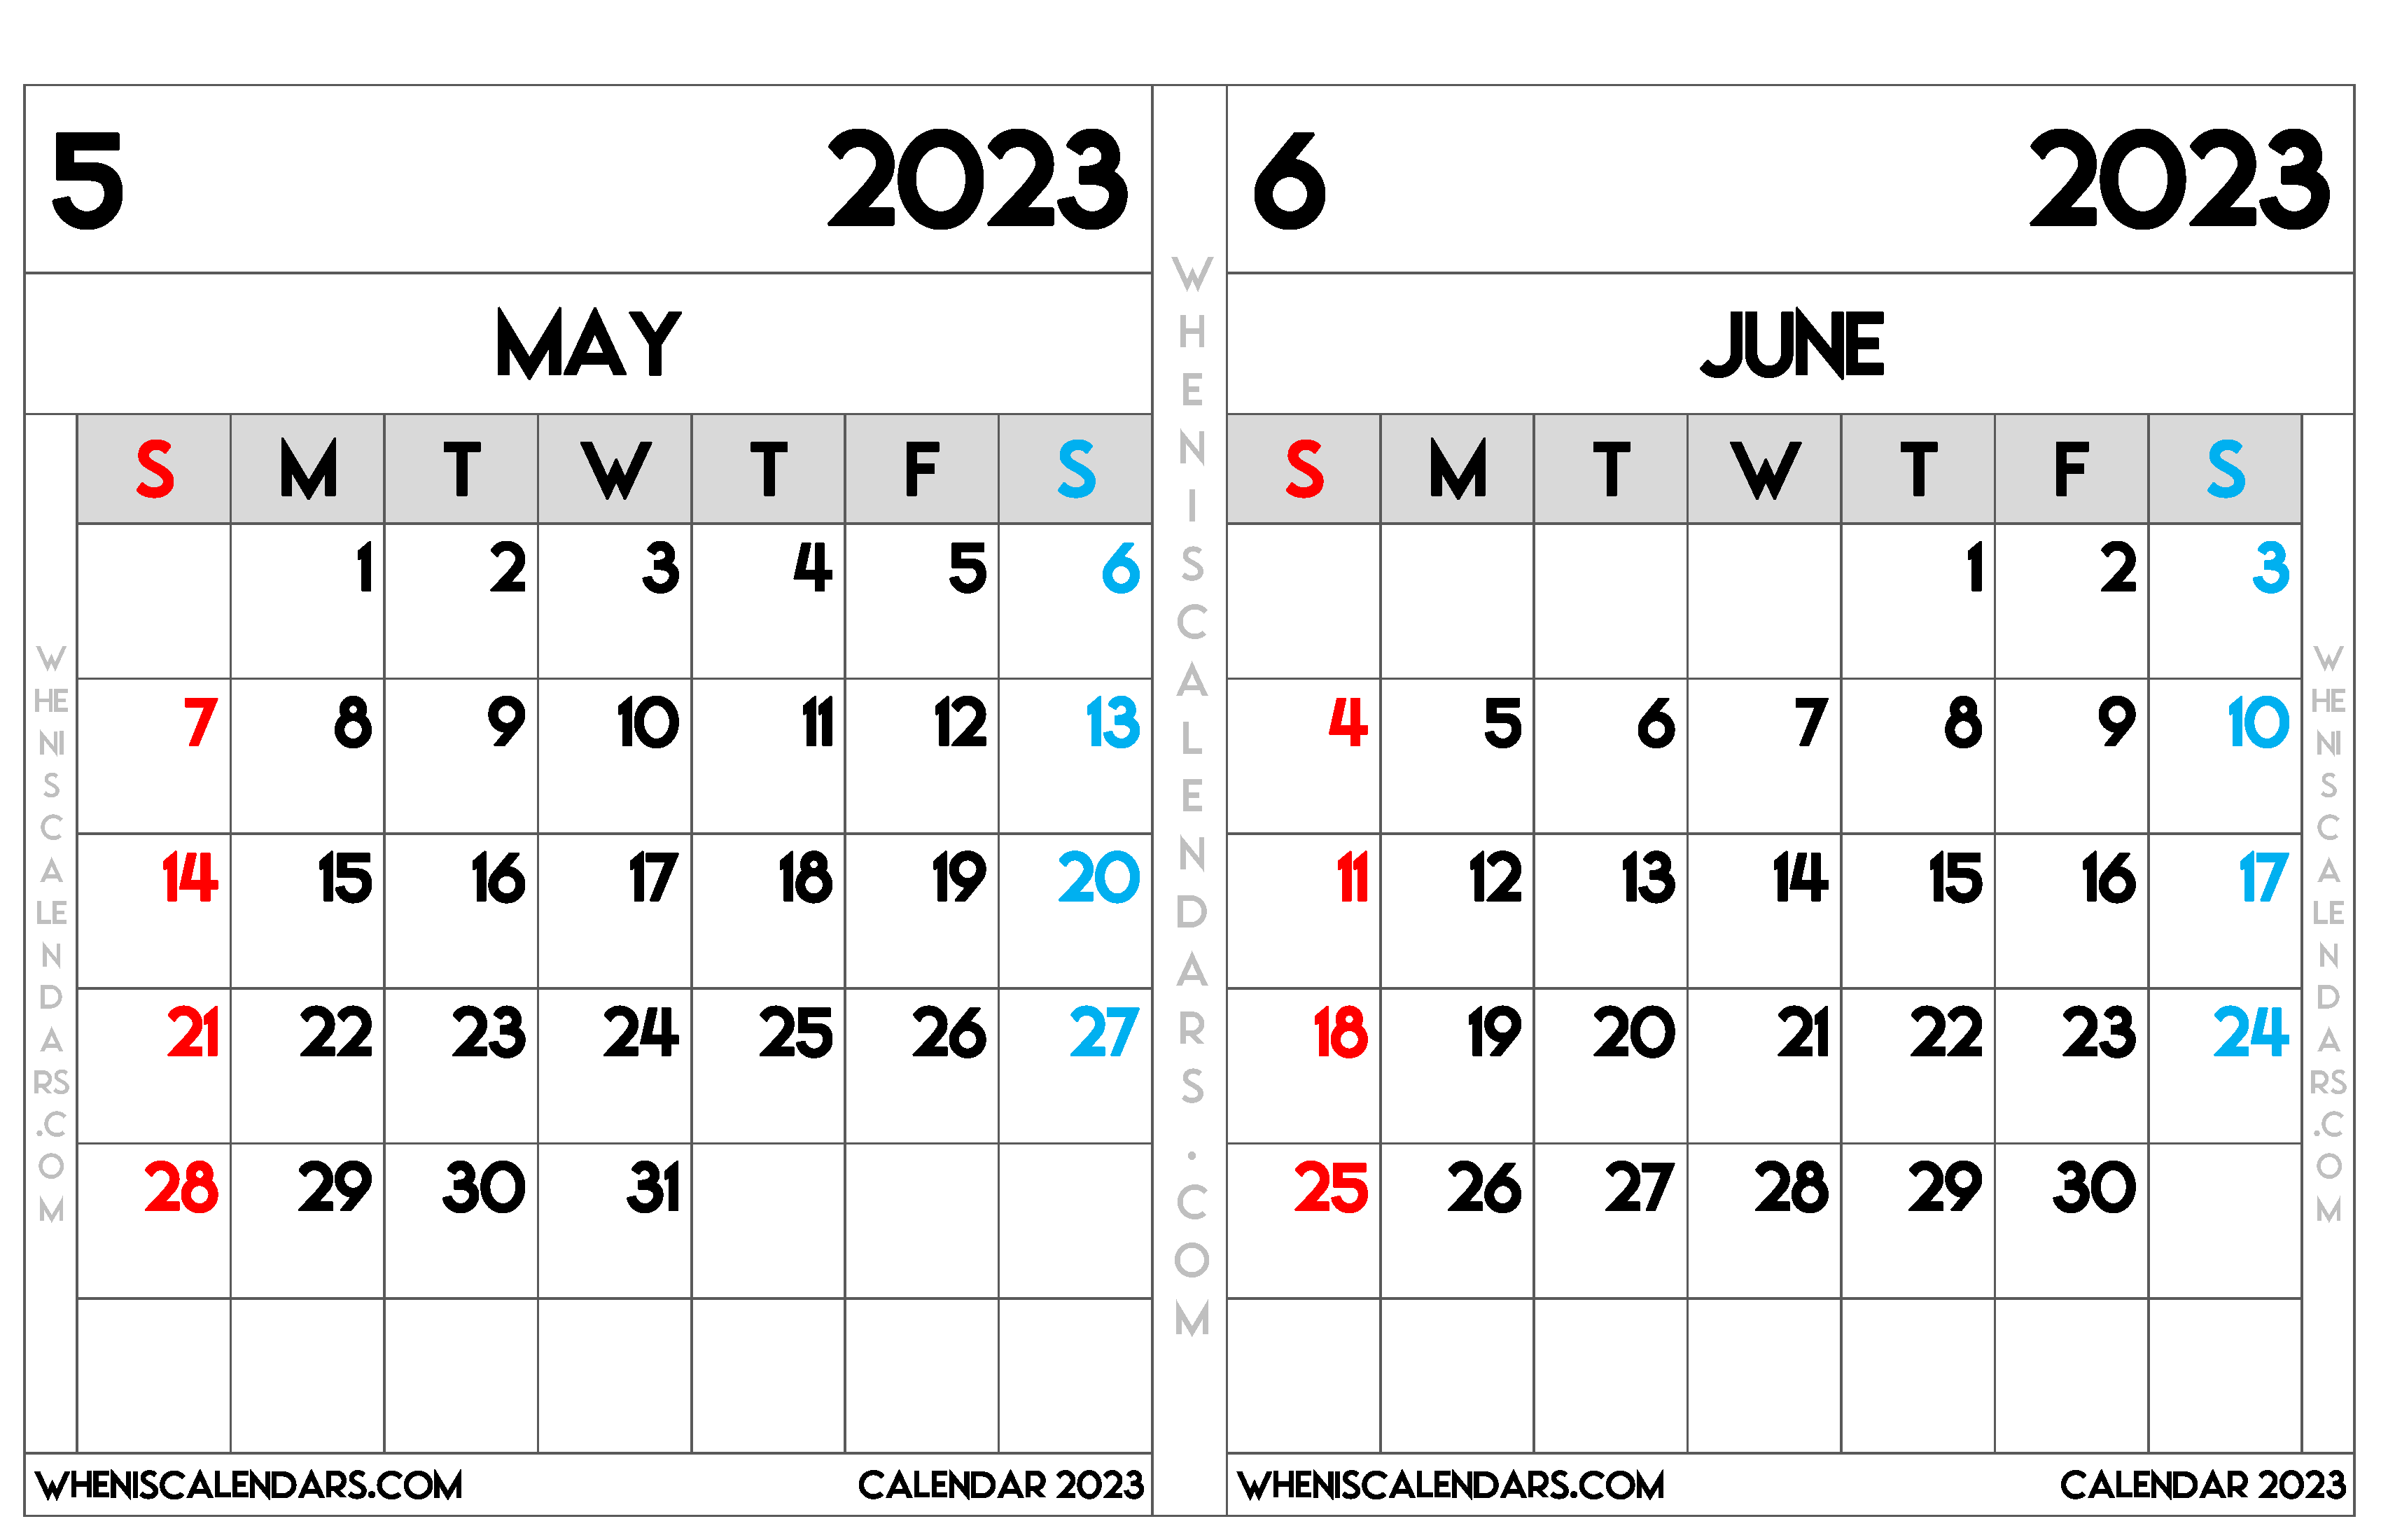 Download Free Printable May June 2023 Calendar as PDF and PNG Image